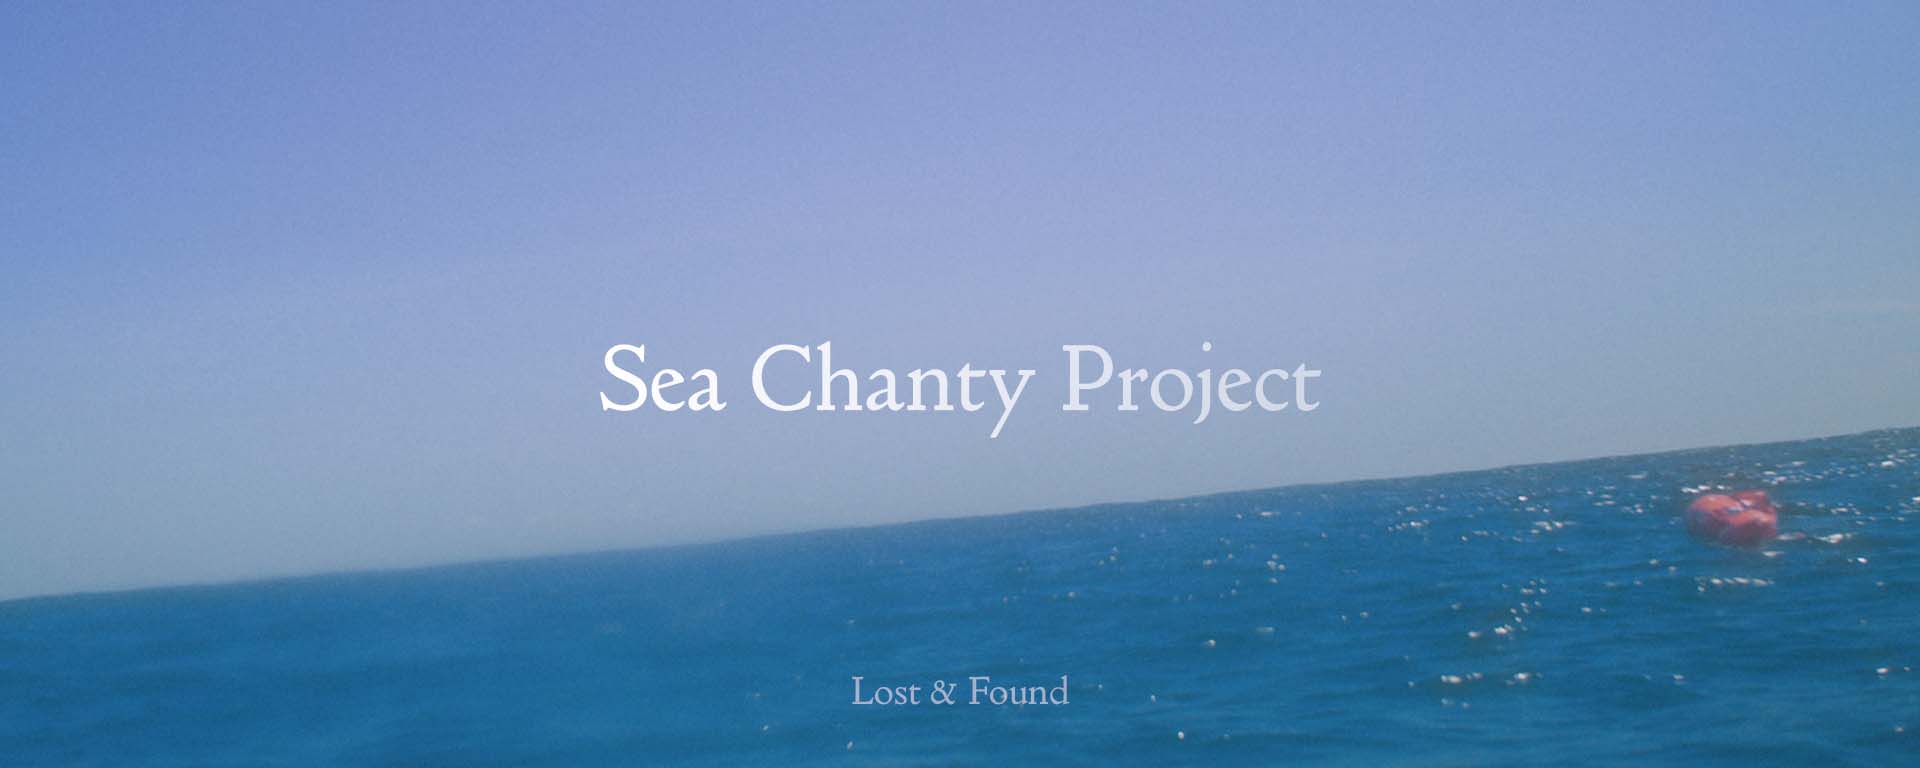 Lost & Found: Sea Chanty Project